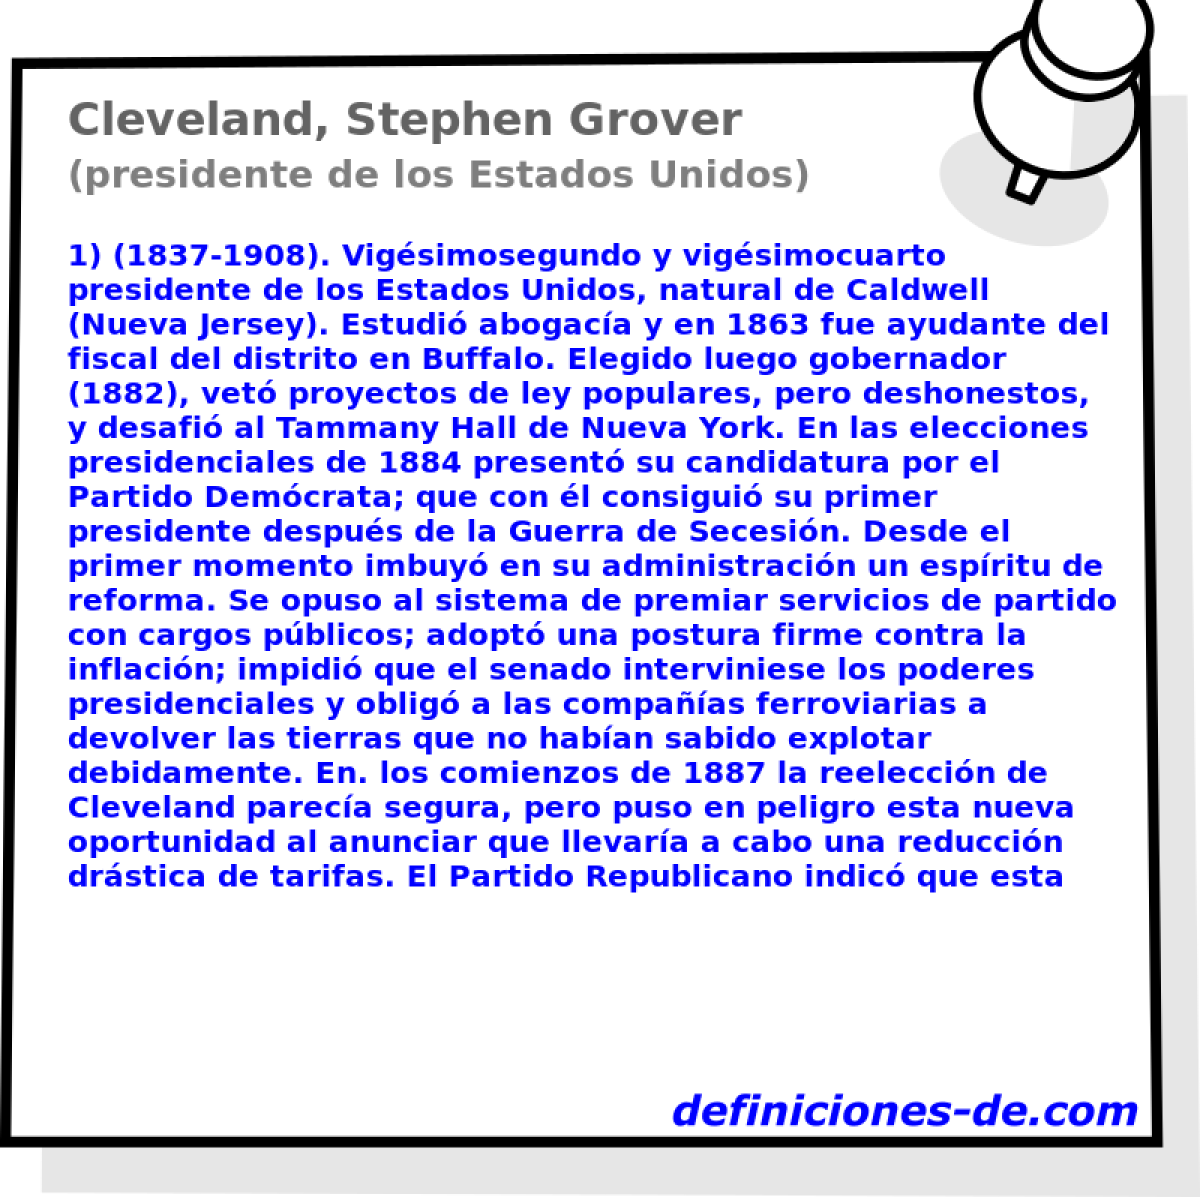 Cleveland, Stephen Grover (presidente de los Estados Unidos)